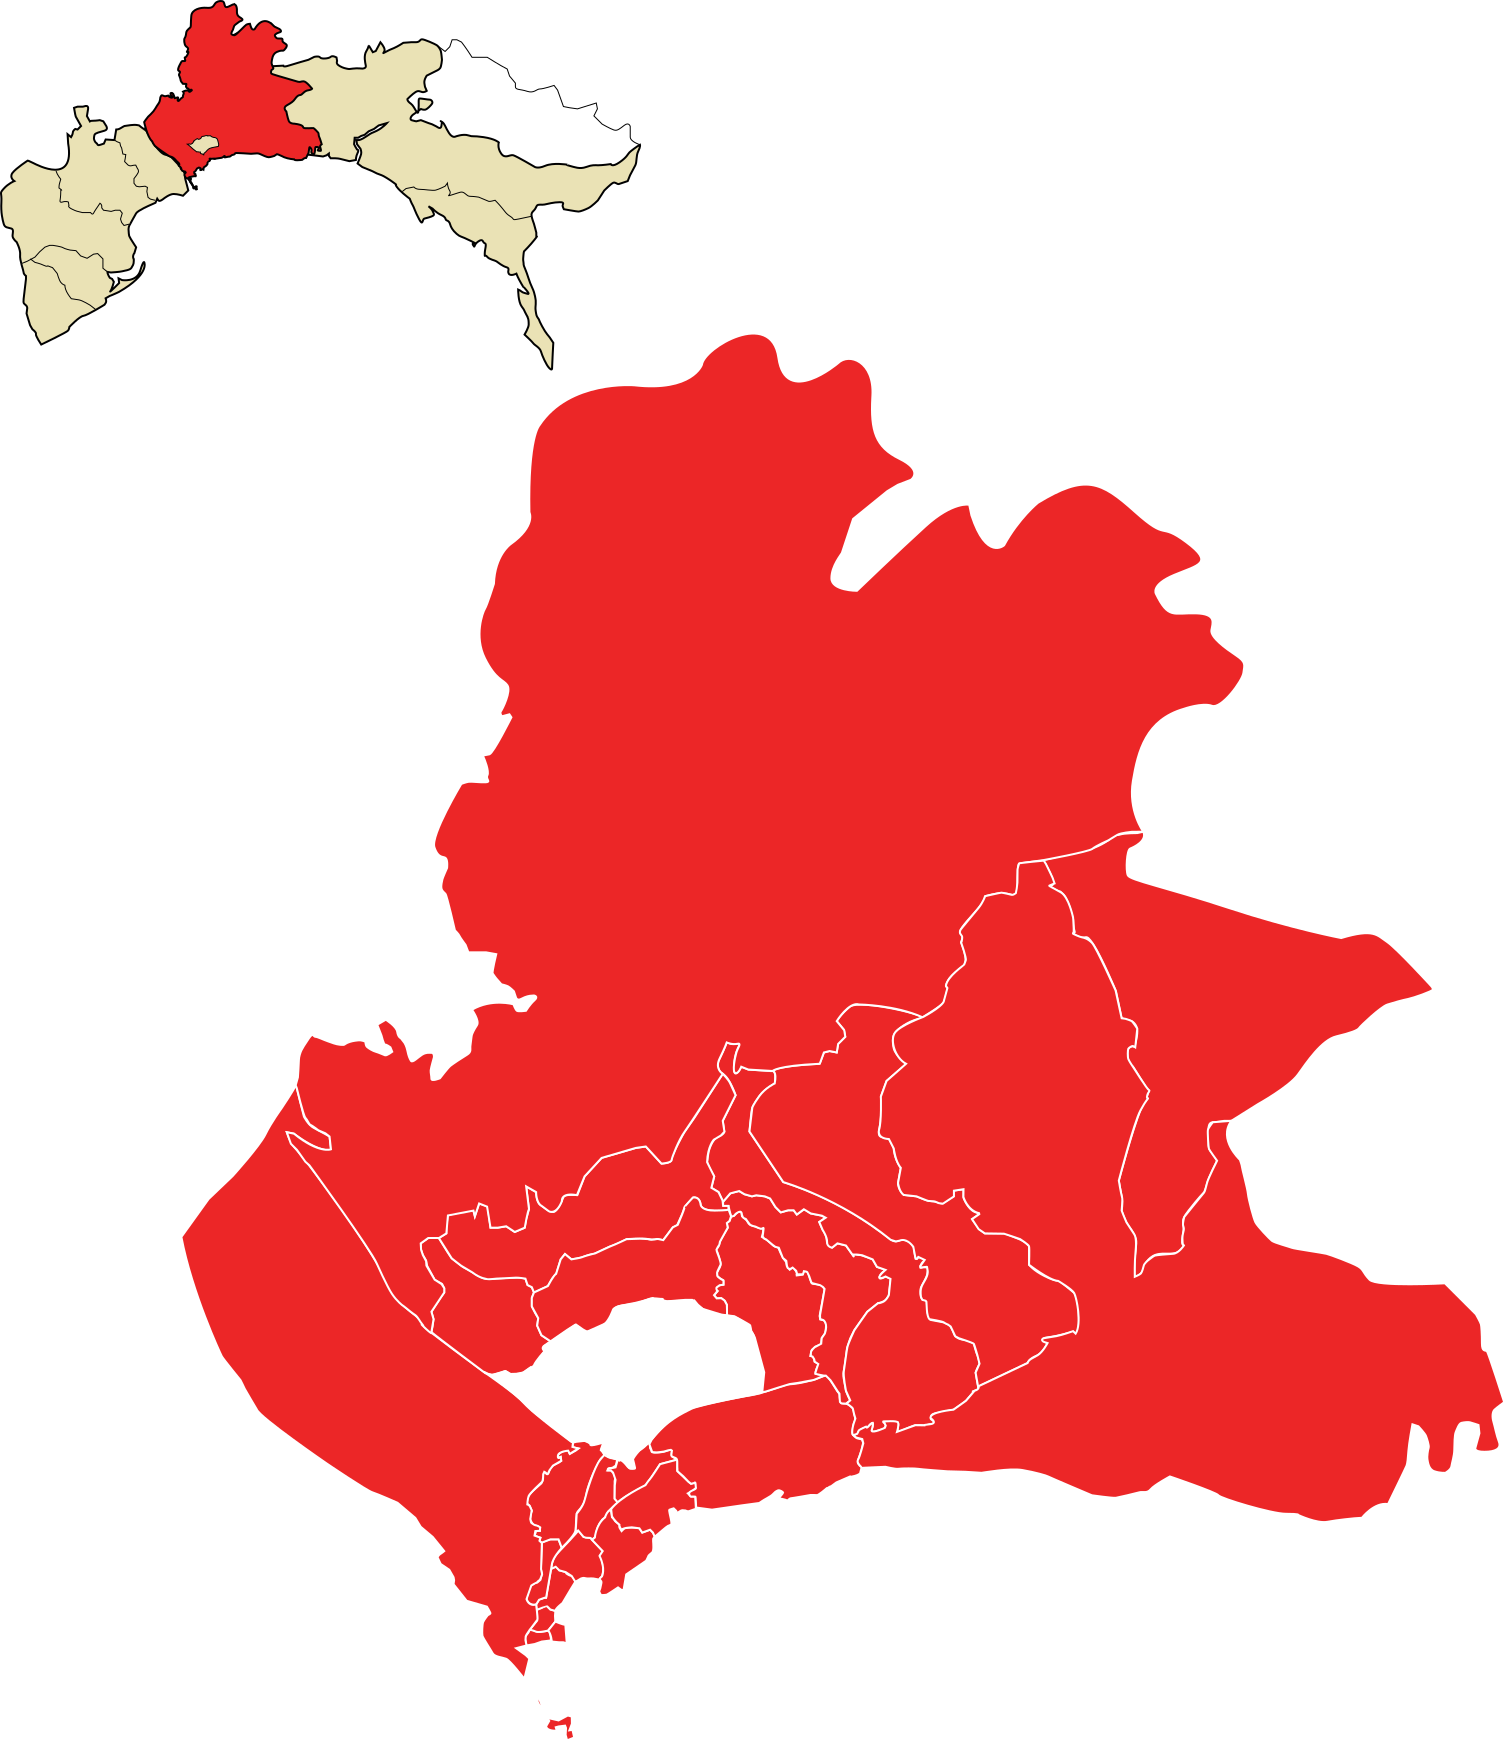 Panama Map Highlighting Capital Region